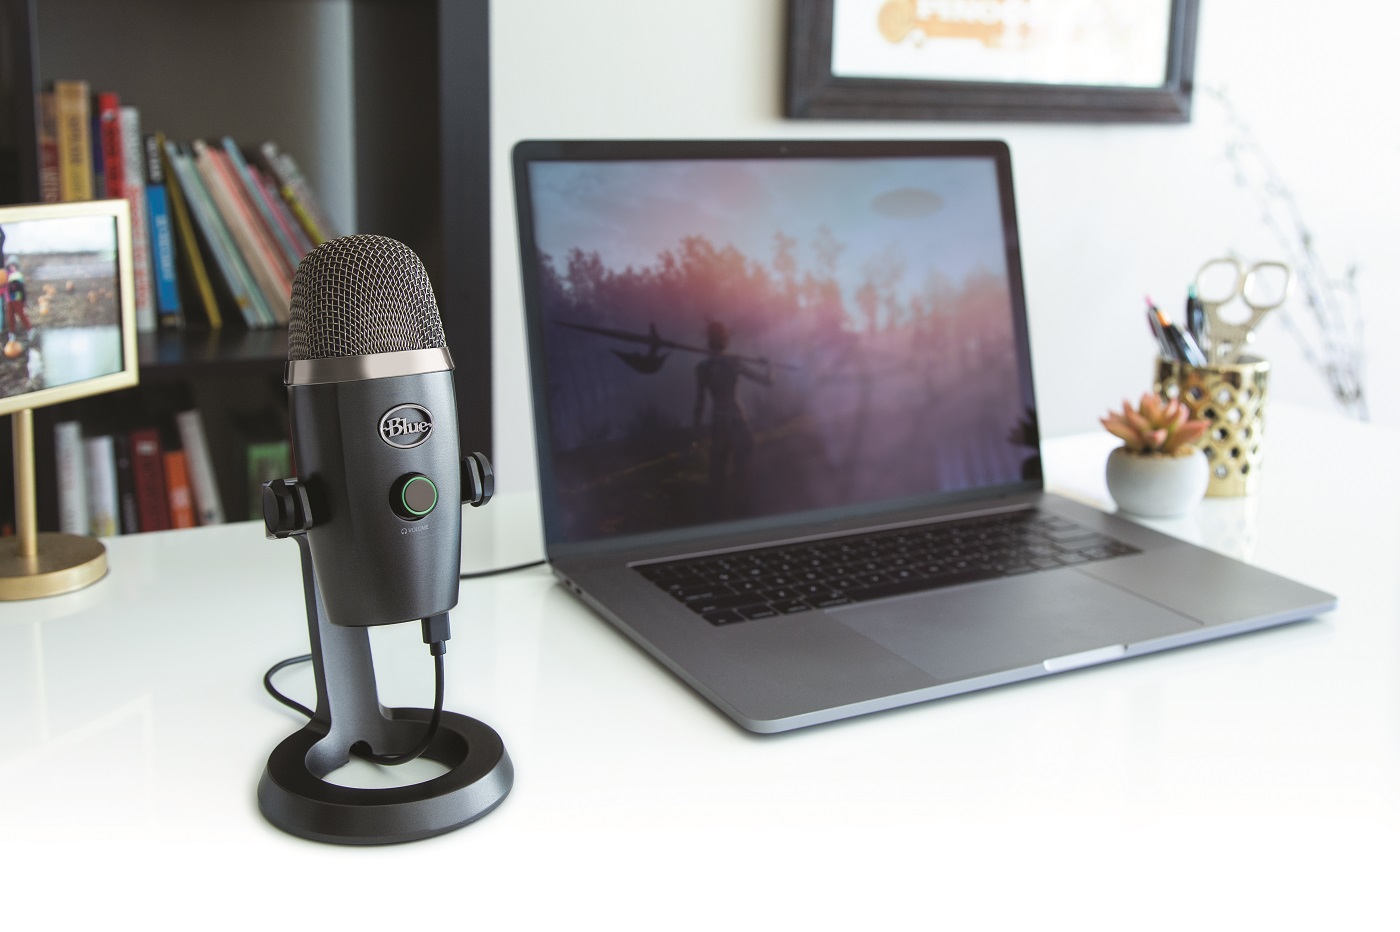 Blue Yeti Nano Premium USB Microphone for Recording & Streaming- Shadow Grey